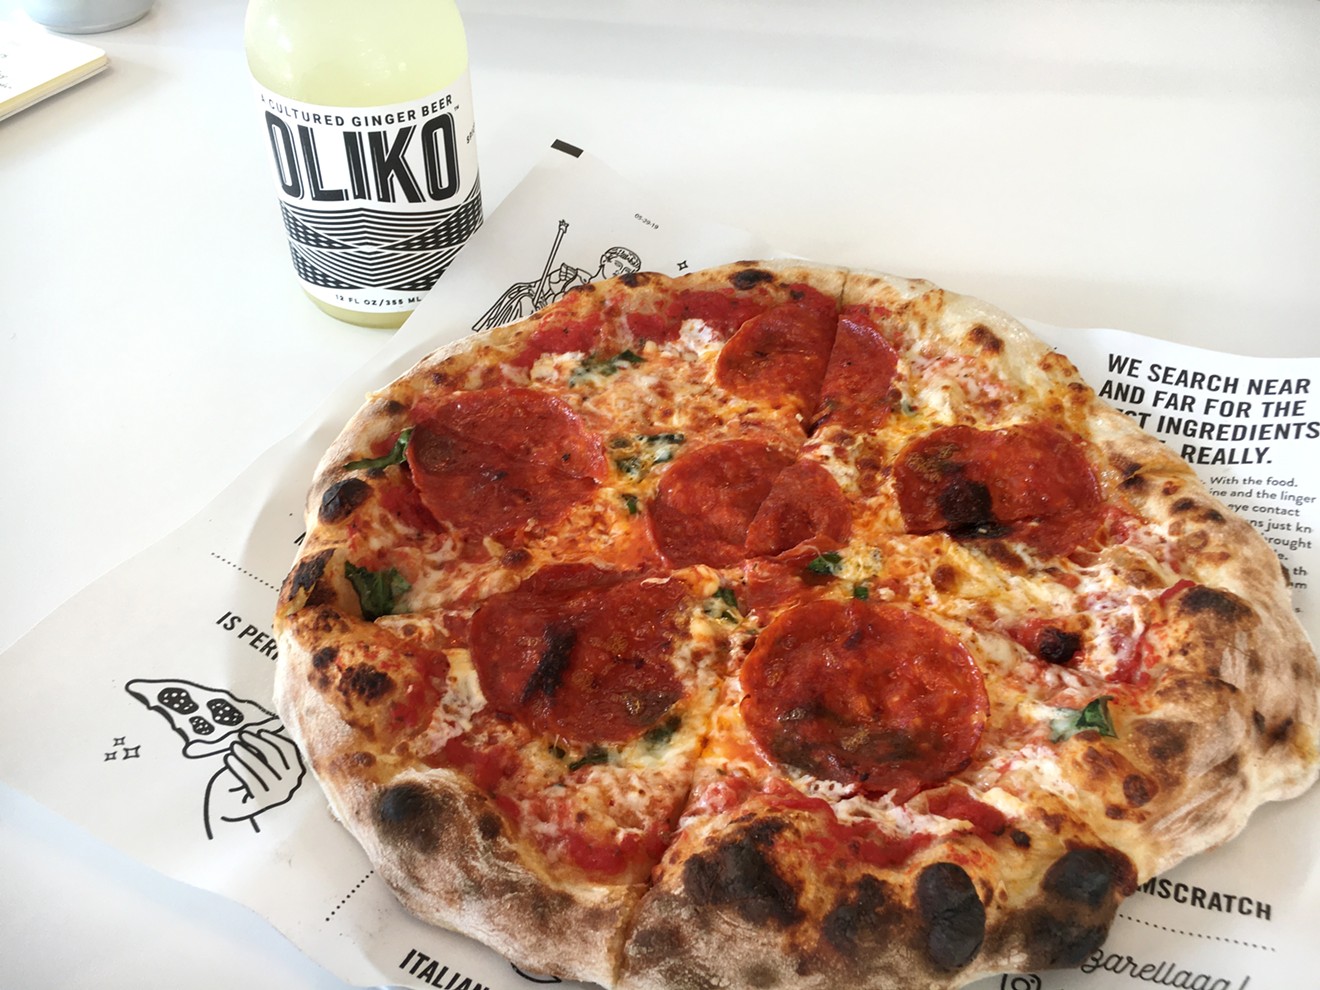 Pizzeria Locale brings its "neighborhood Neapolitan" to 9th & Colorado.